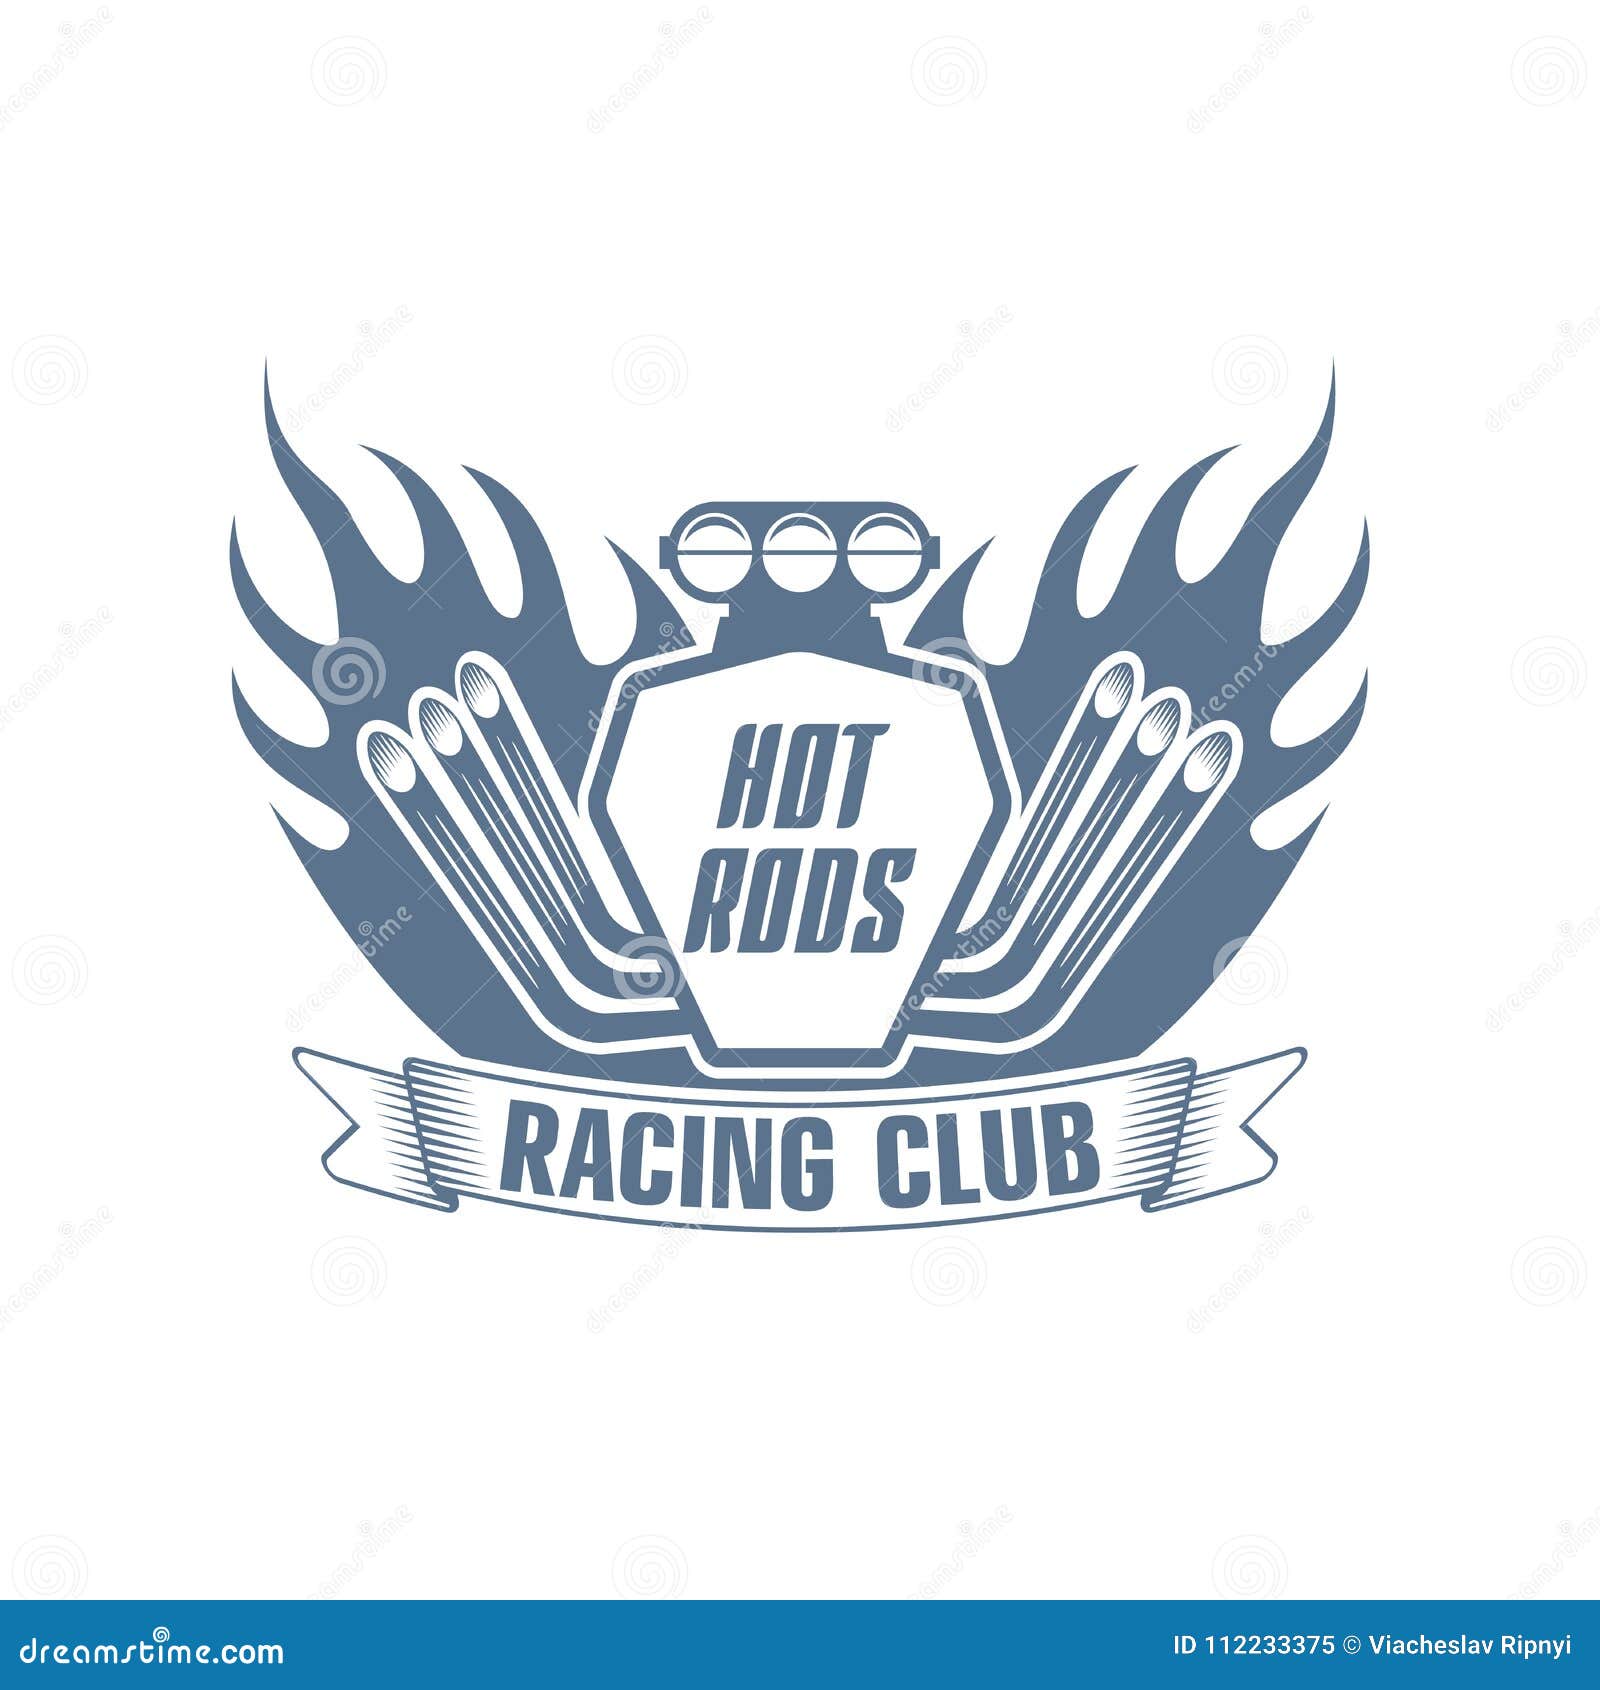 Vector Racing Club Monochrome Logo Stock Vector - Illustration of mechanic,  banner: 112233375